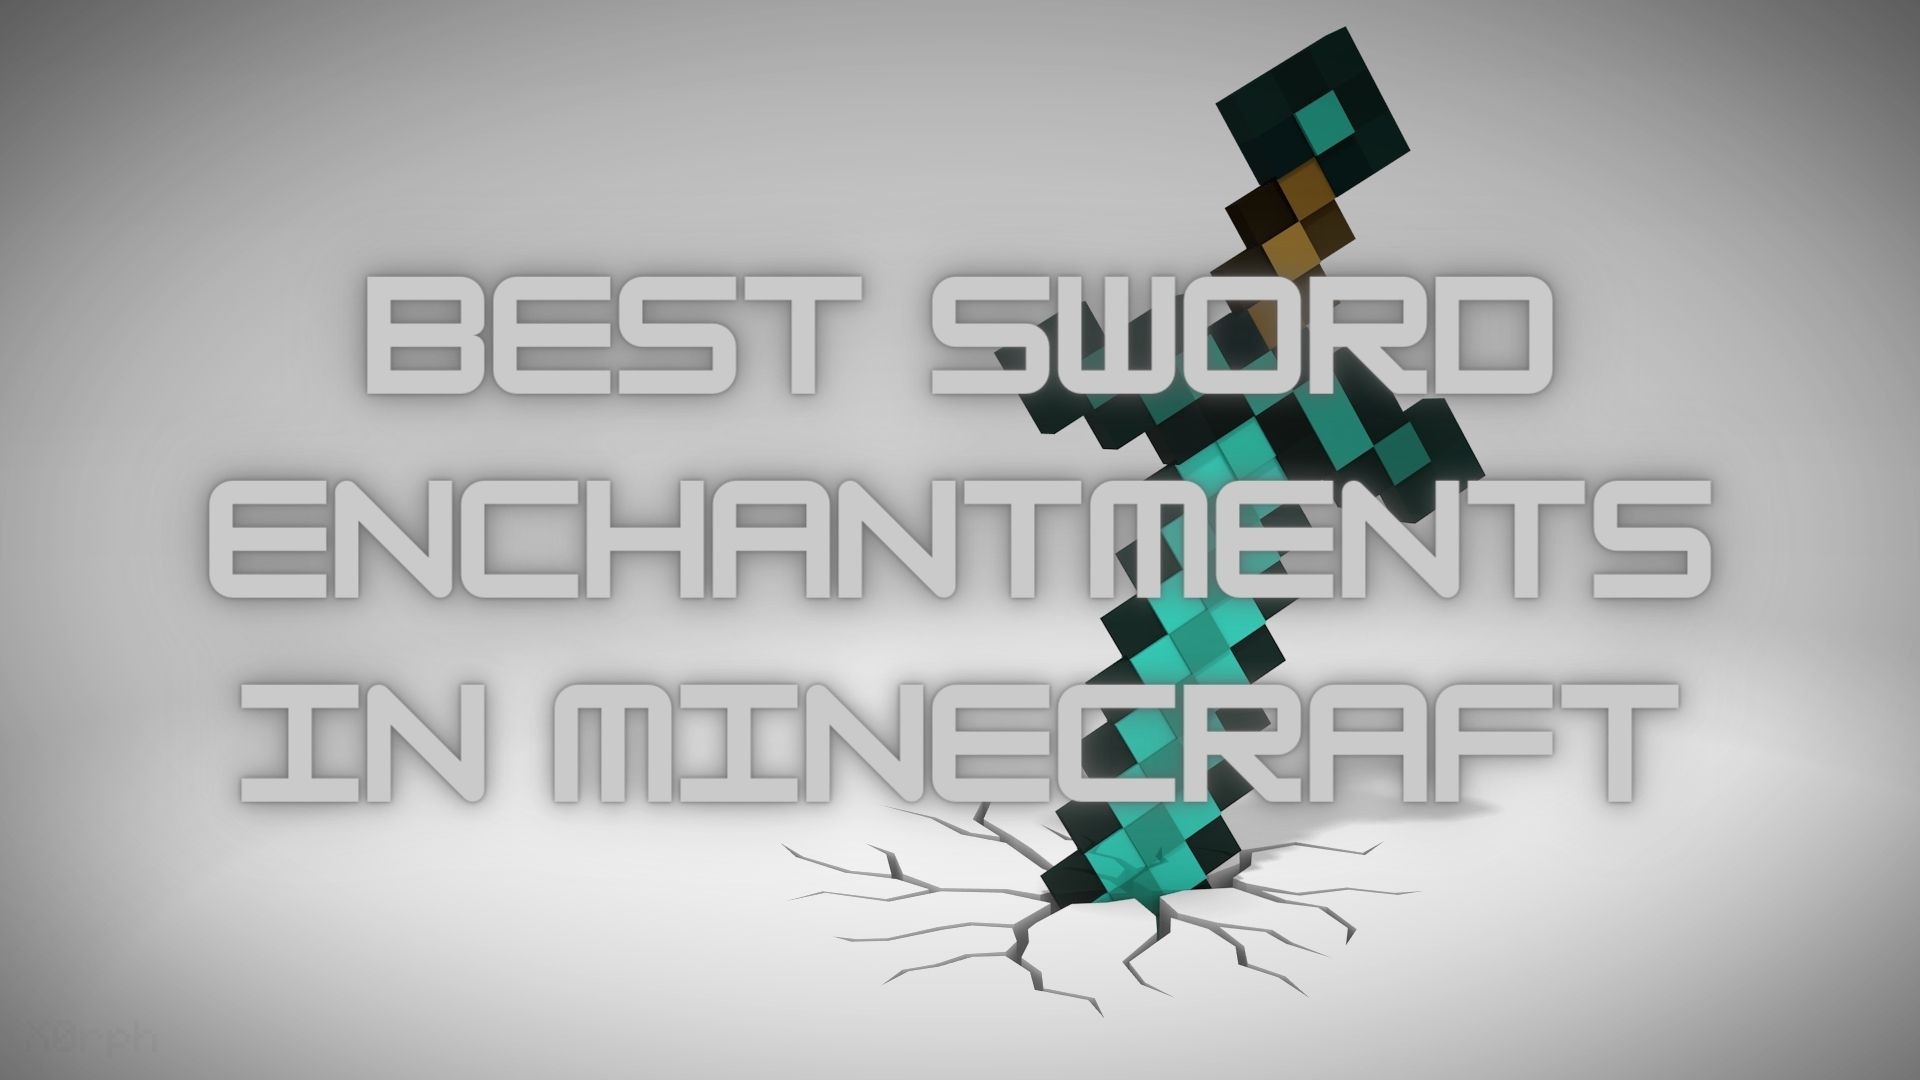 minecraft enchanted diamond sword wallpaper